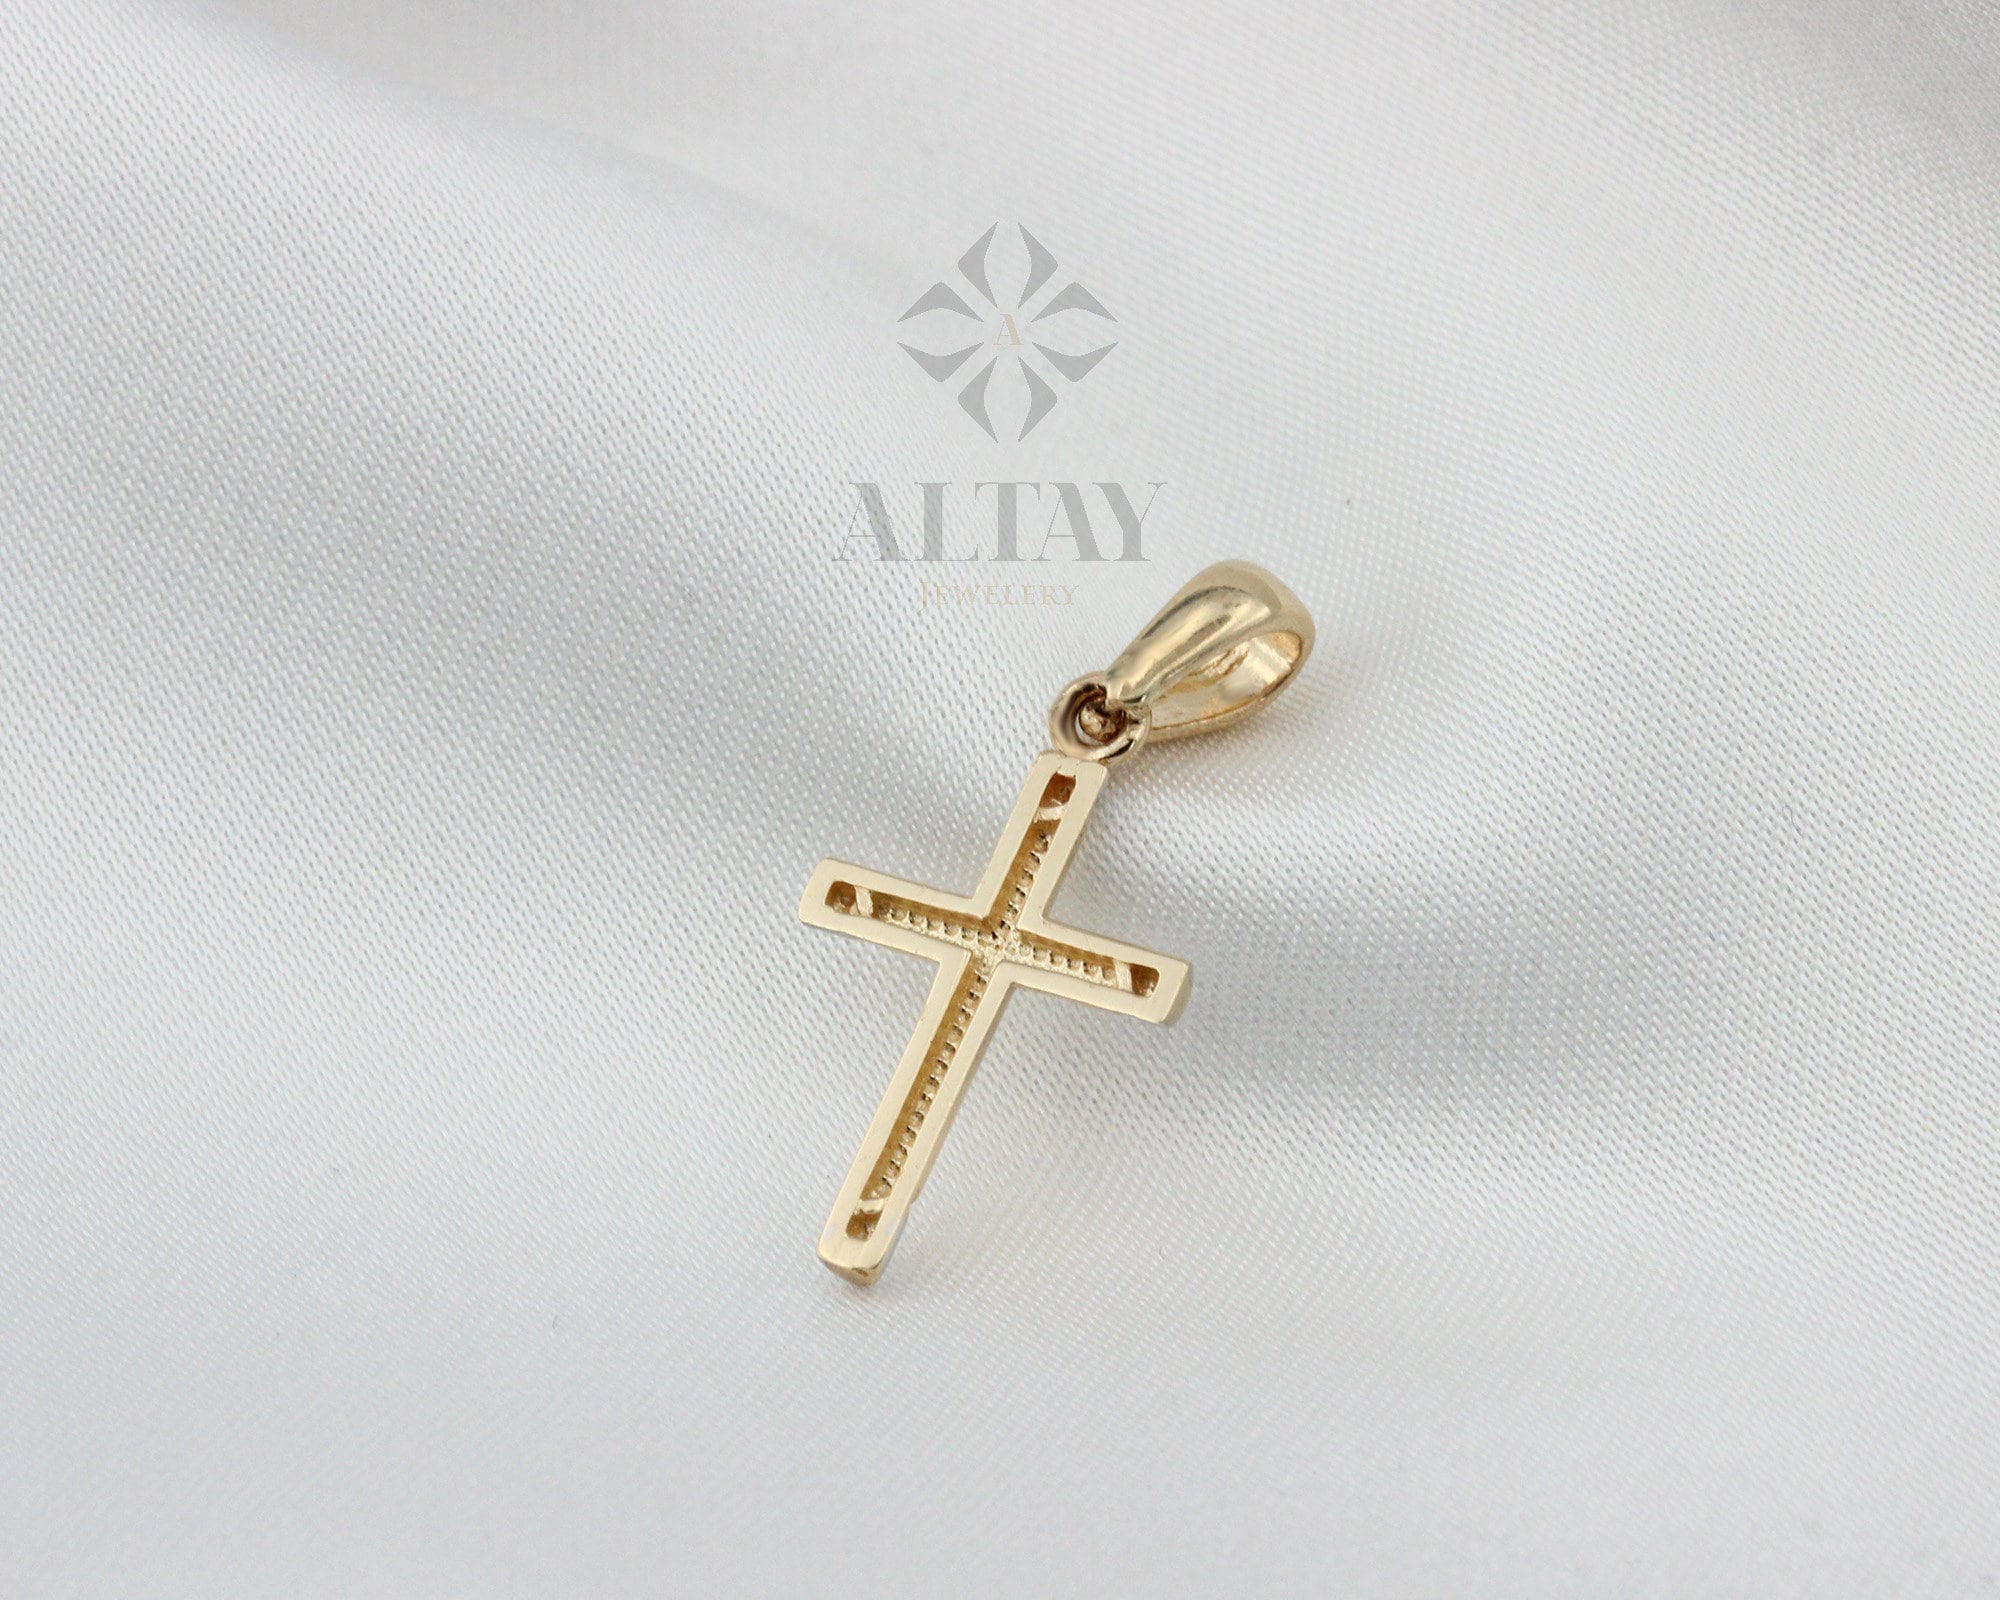 14K Gold Cross Necklace, Crucifix Pendant Chain, Jesus Christ Religious Jewelry, Christening, Dainty Cross Charm, Christian Two-Tone Pendant